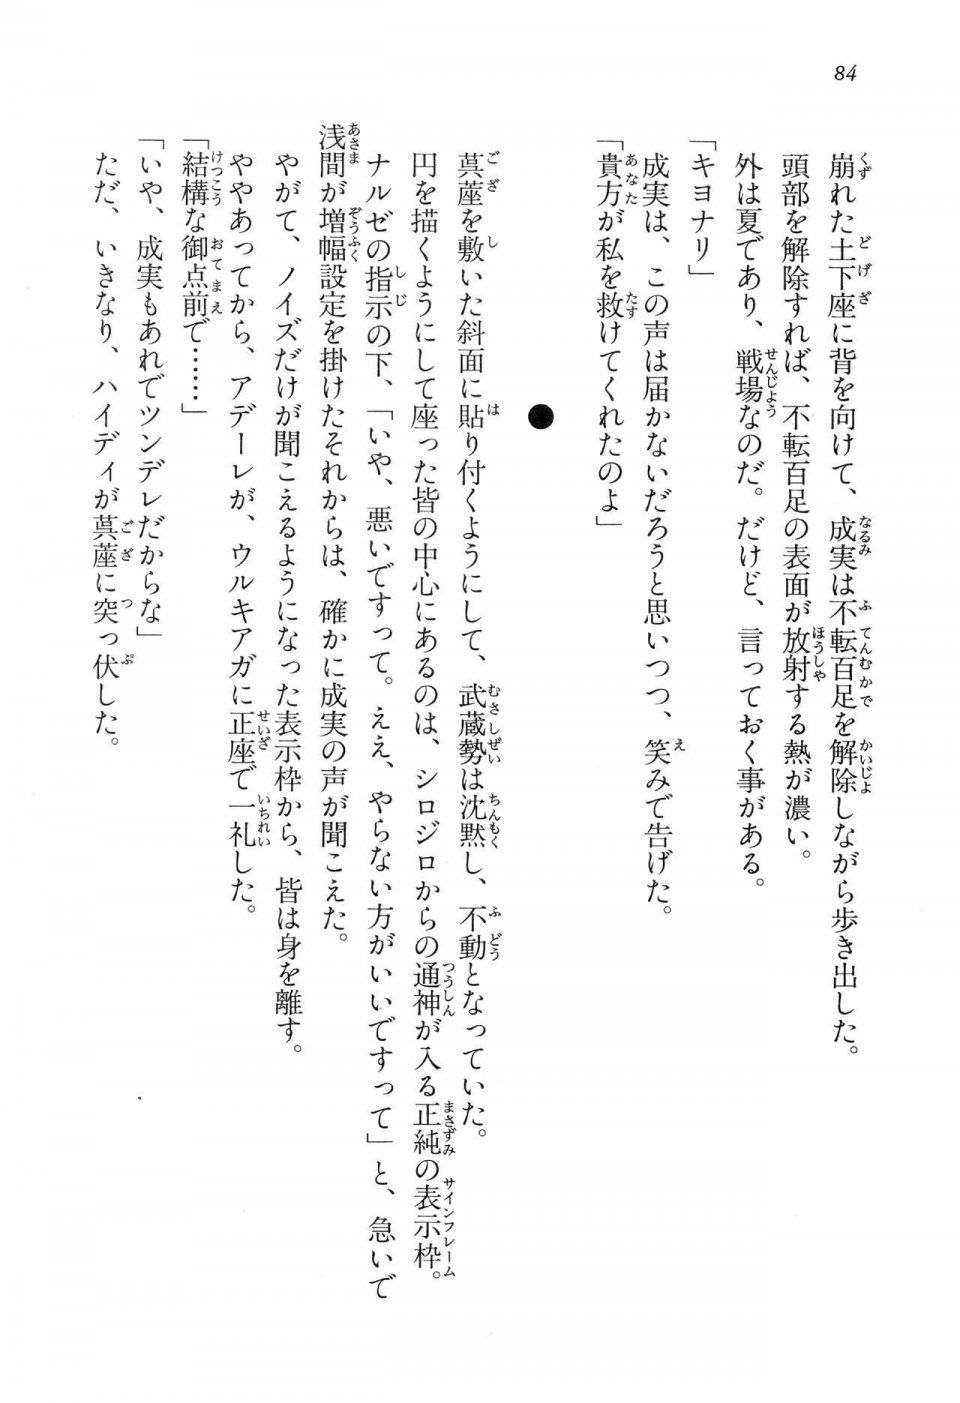 Kyoukai Senjou no Horizon LN Vol 15(6C) Part 1 - Photo #84